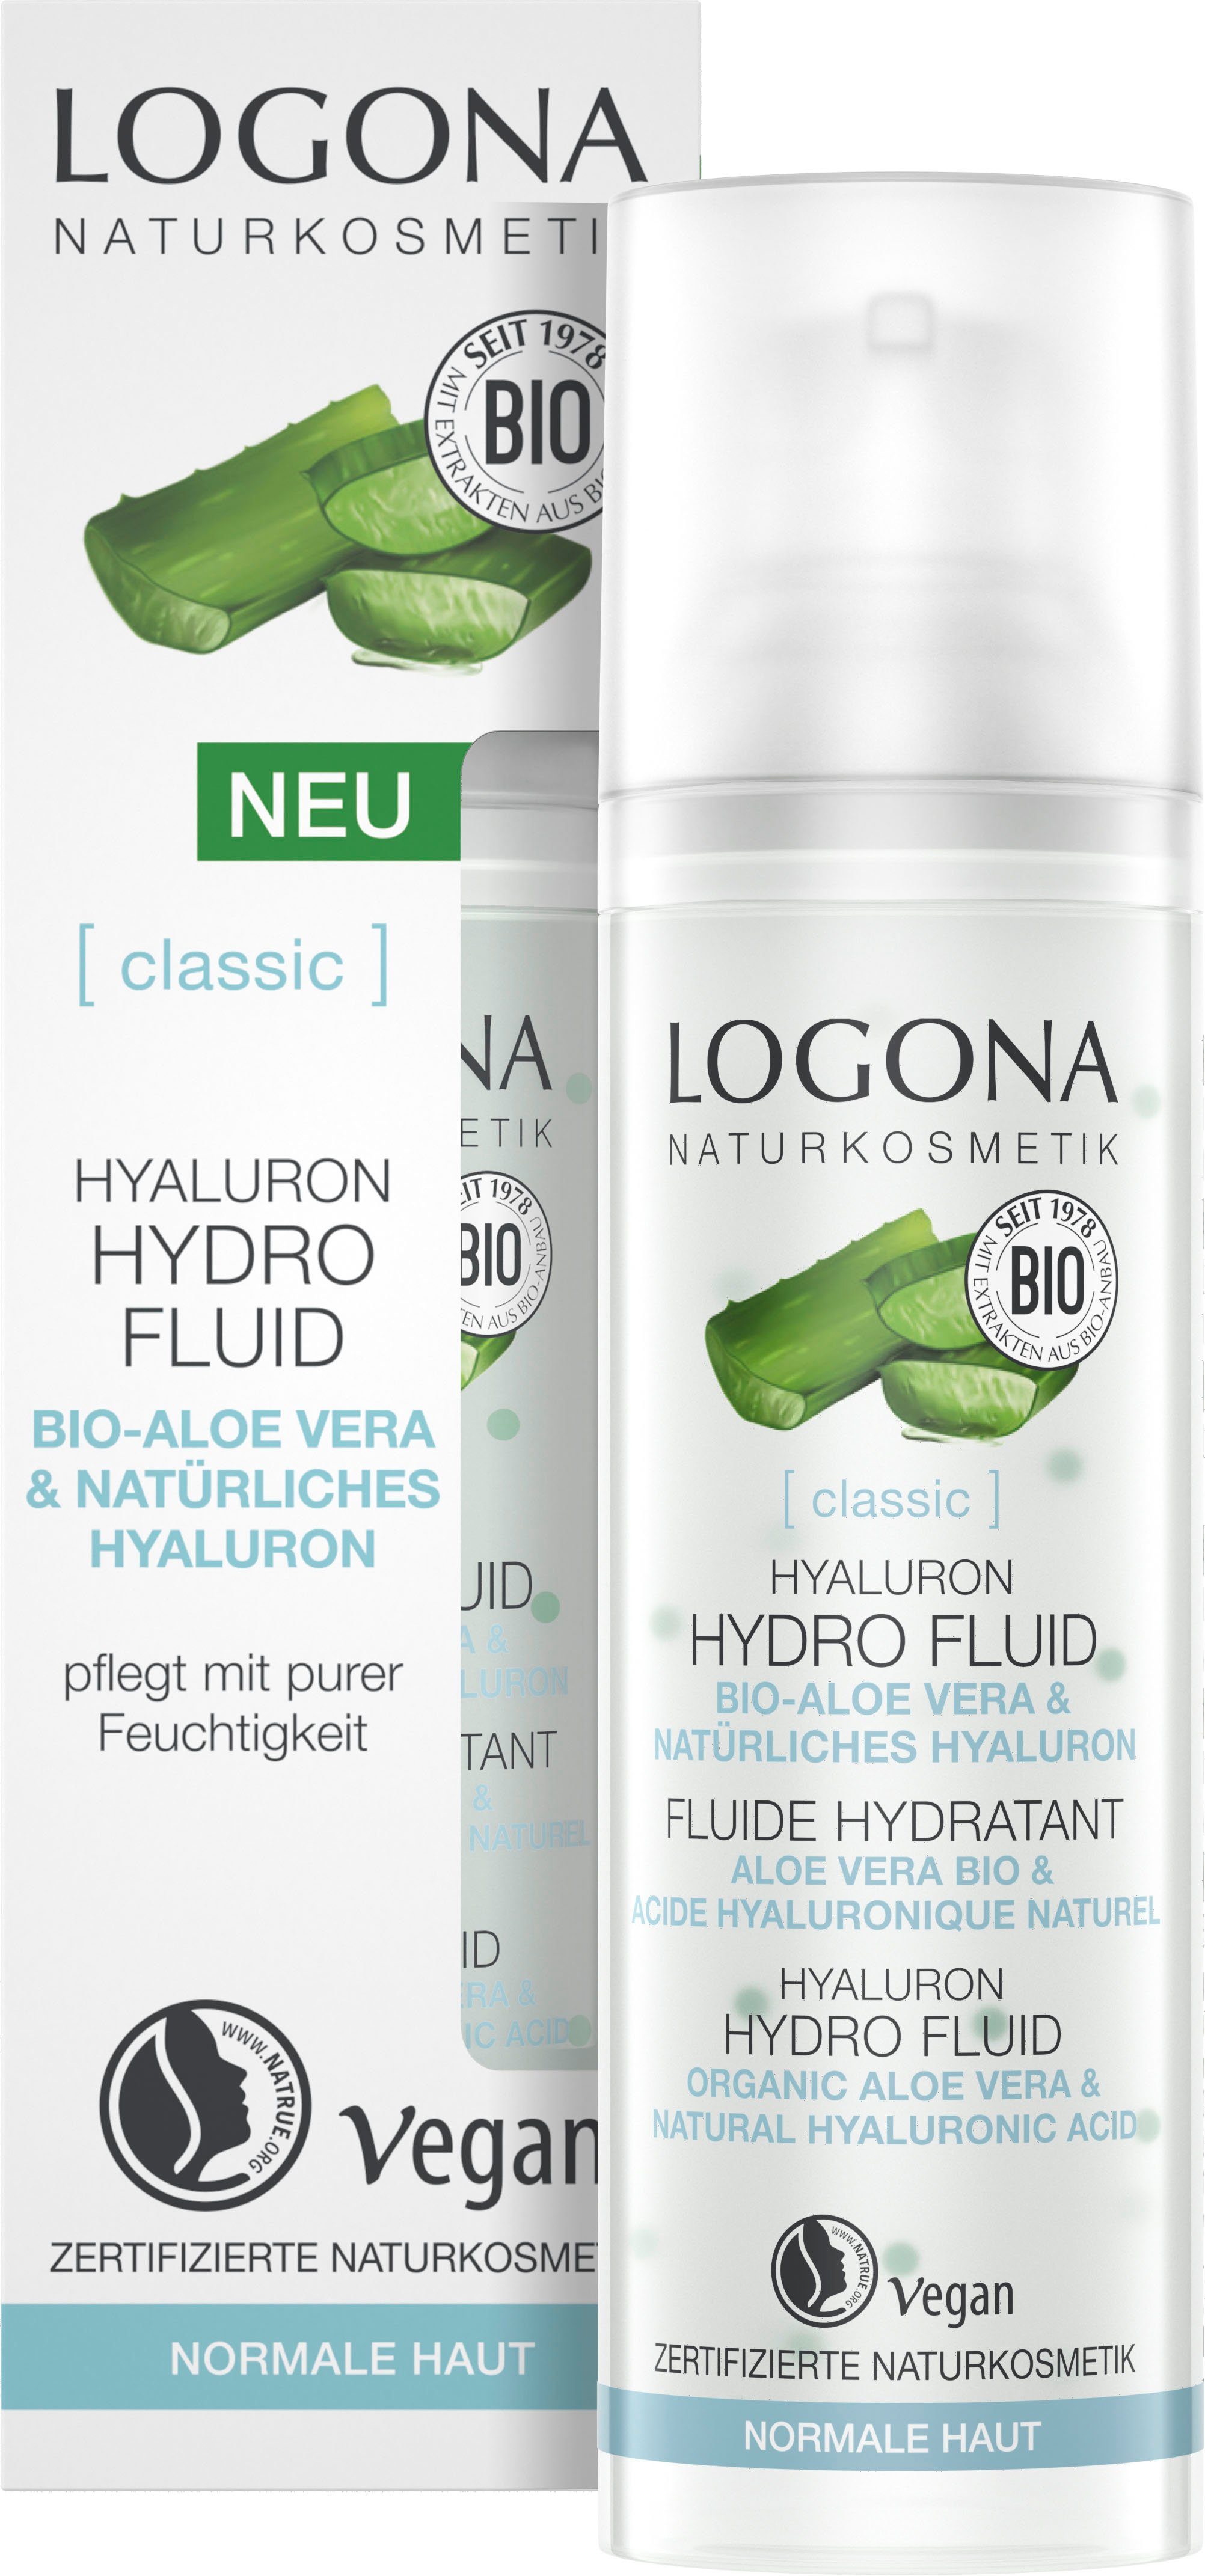 LOGONA Gesichtsfluid Logona [classic] Hyaluron Fluid Hydro